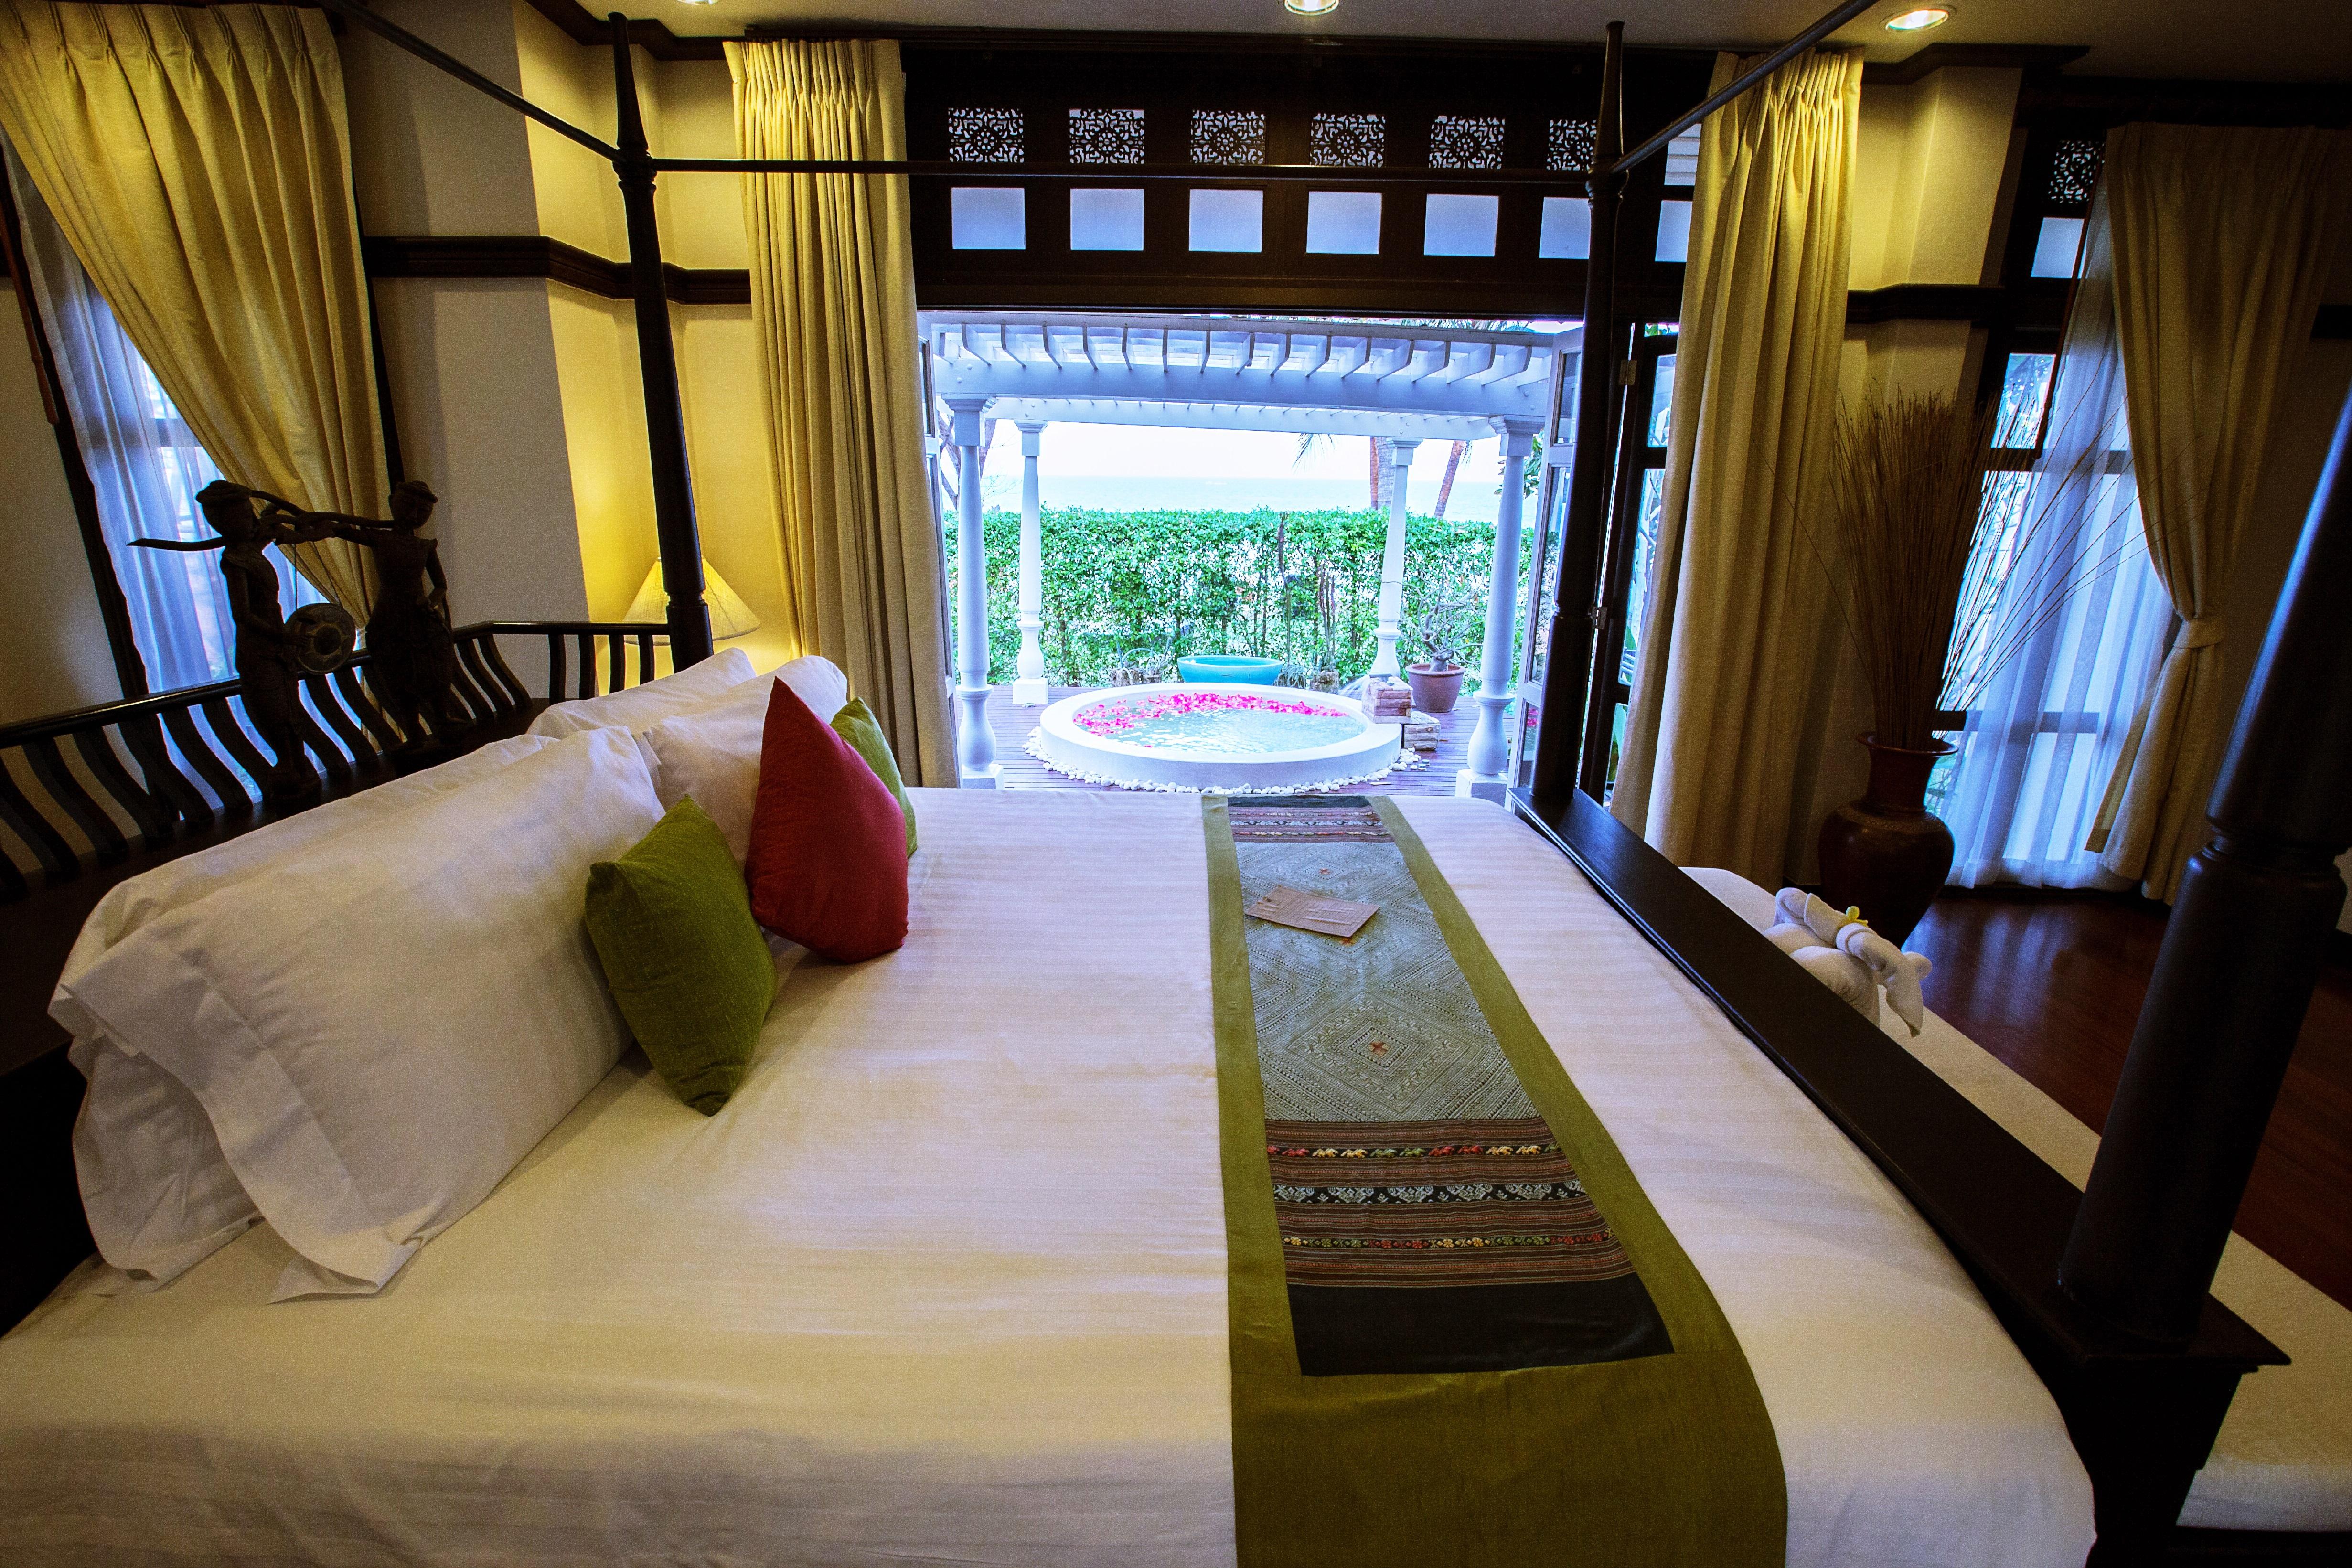 Wora Bura Hua Hin Resort & Spa - Sha Extra Plus Exterior foto